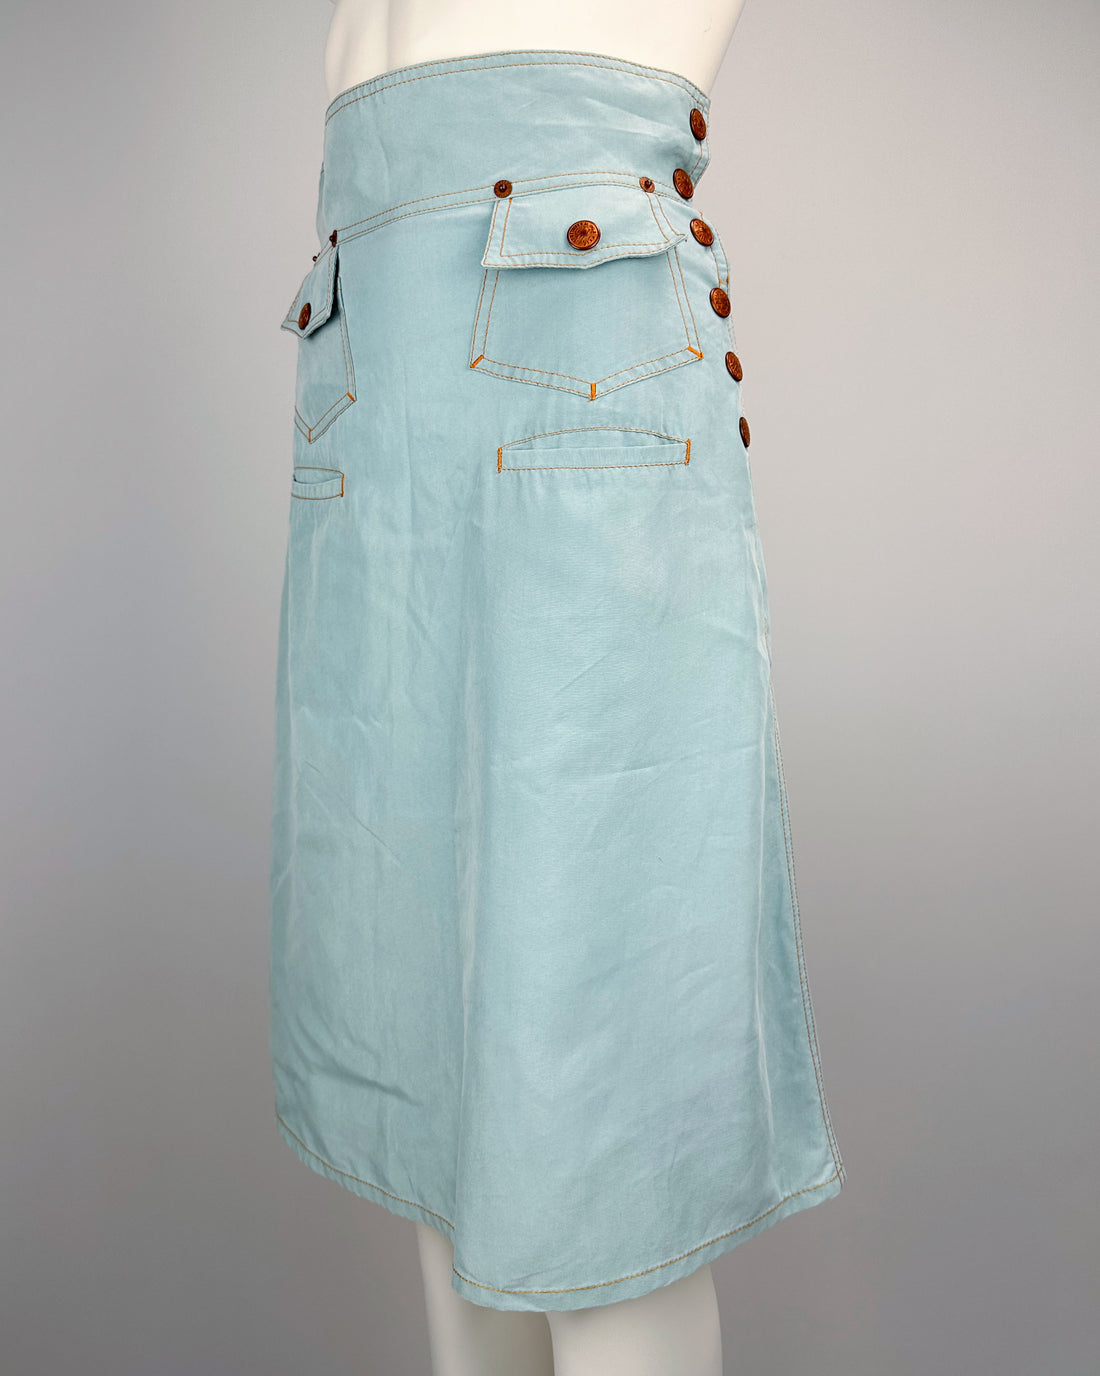 Jean Paul Gaultier Sky Blue High Skirt 2000's